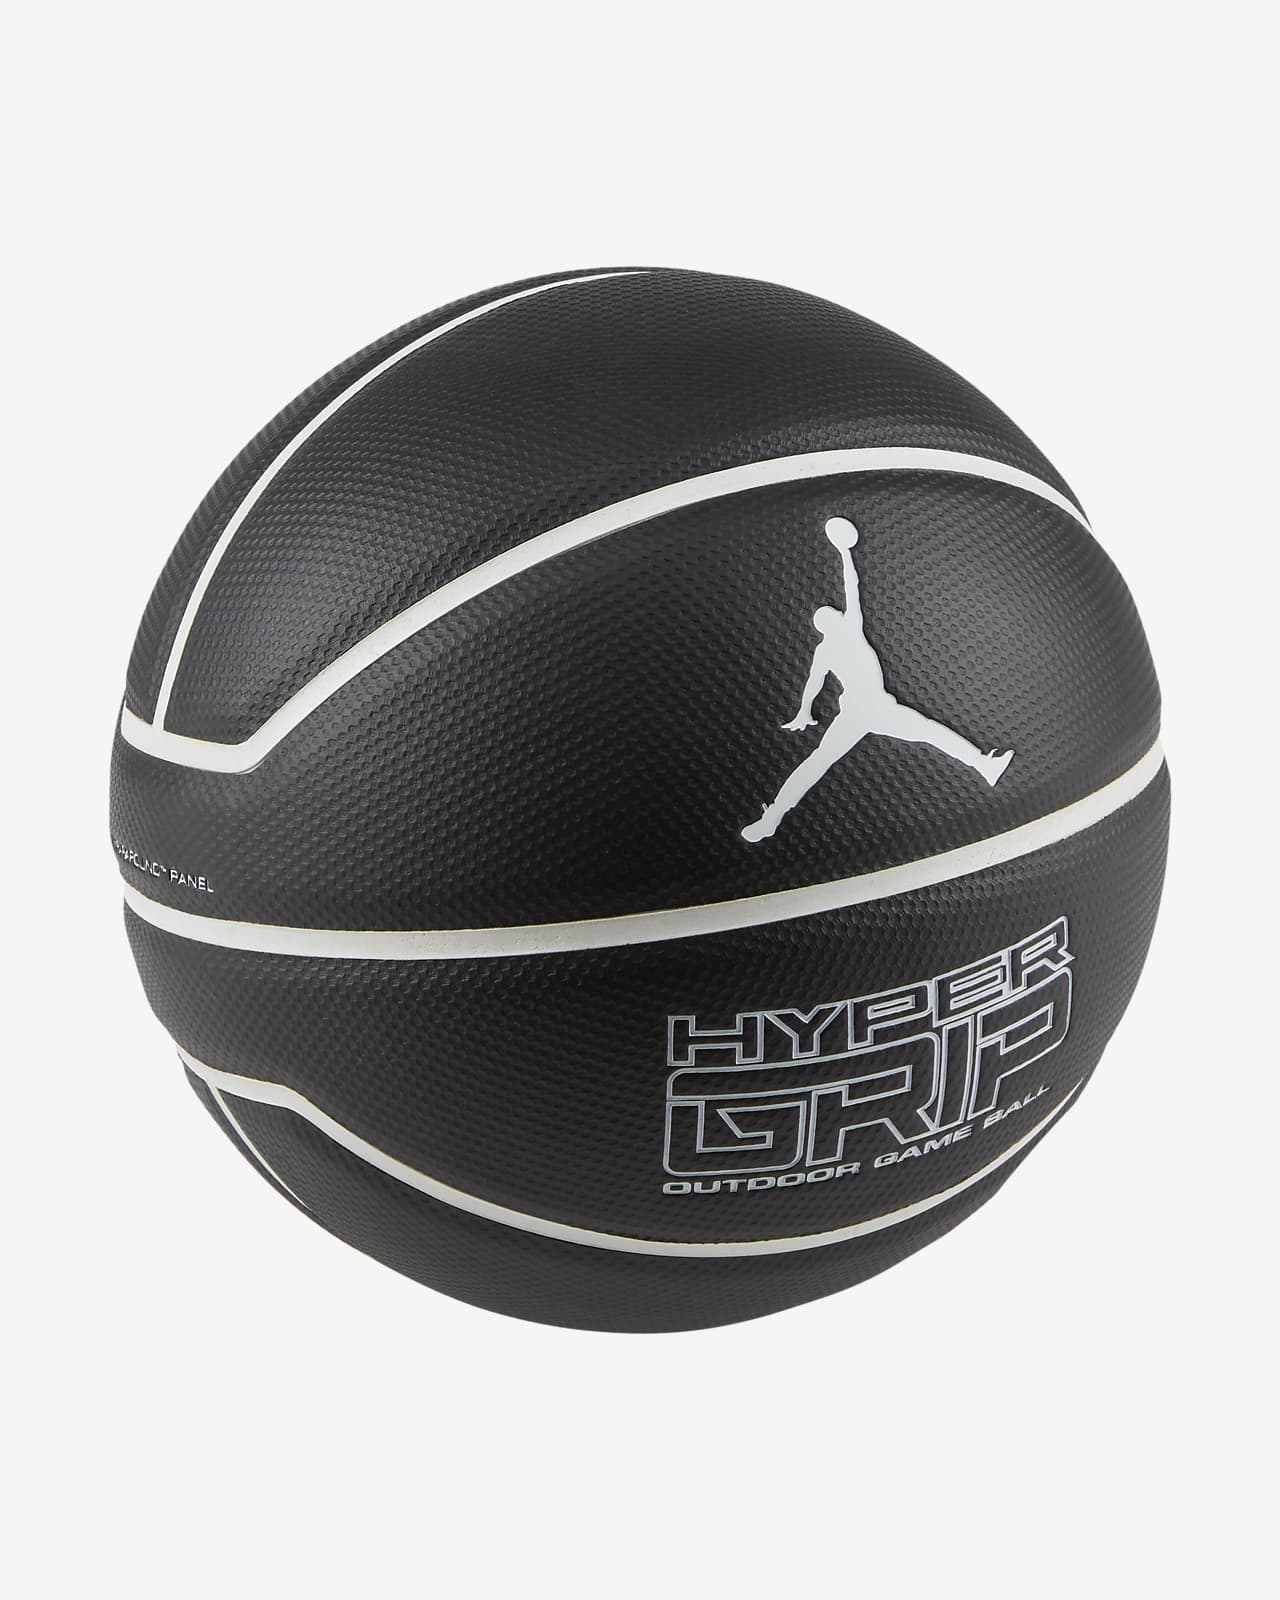 Jordan Hyper Grip 4P Basketball (Size 7 